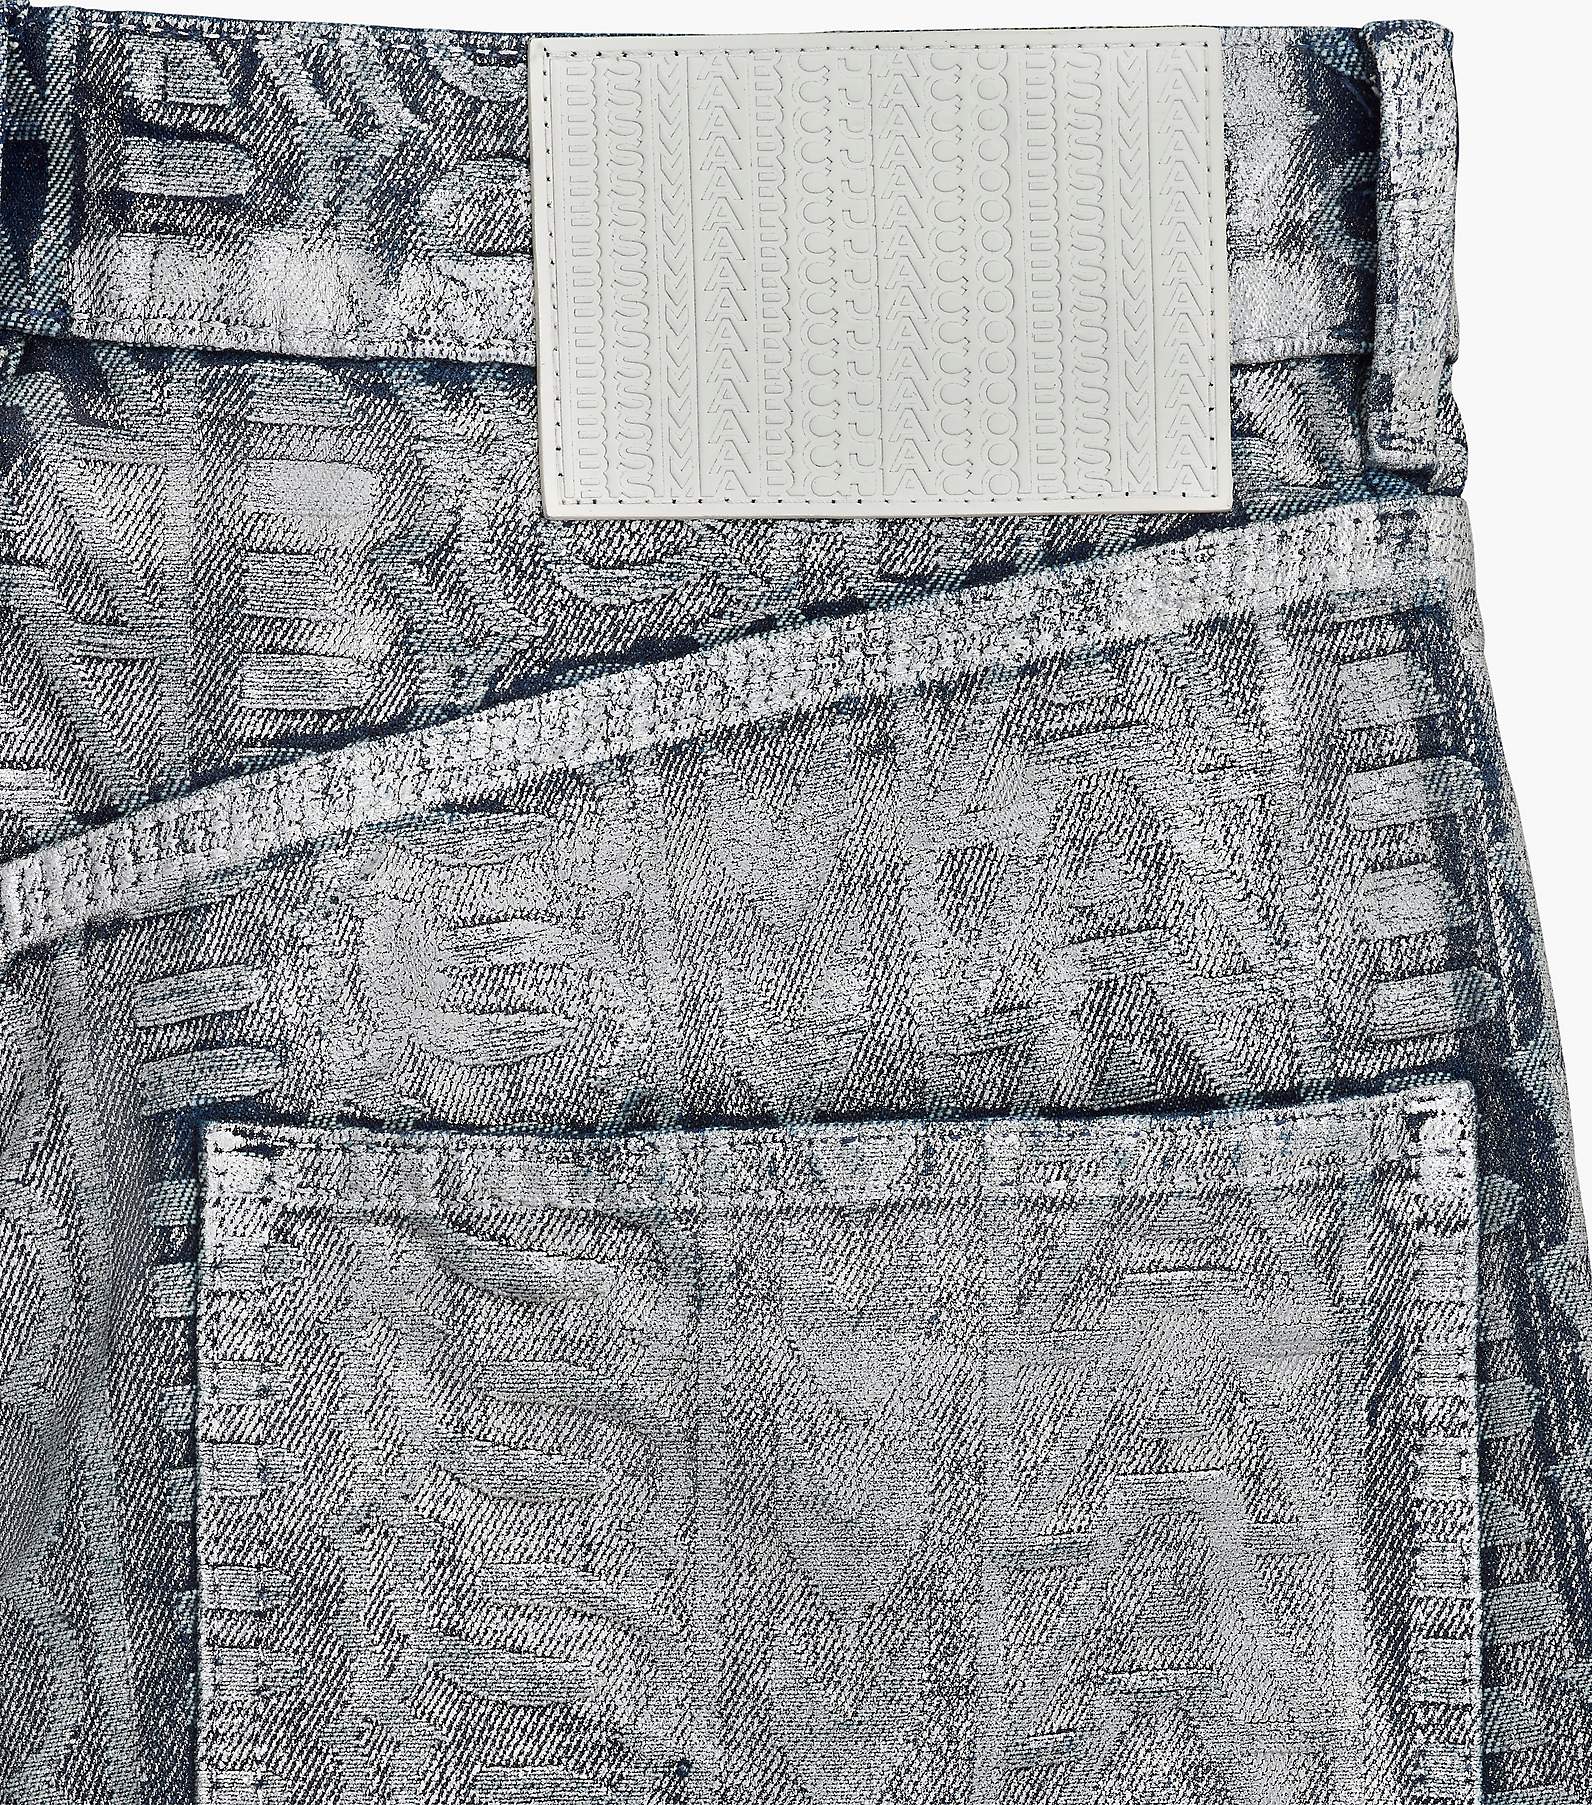 Marc Jacobs The Monogram Denim Jeans